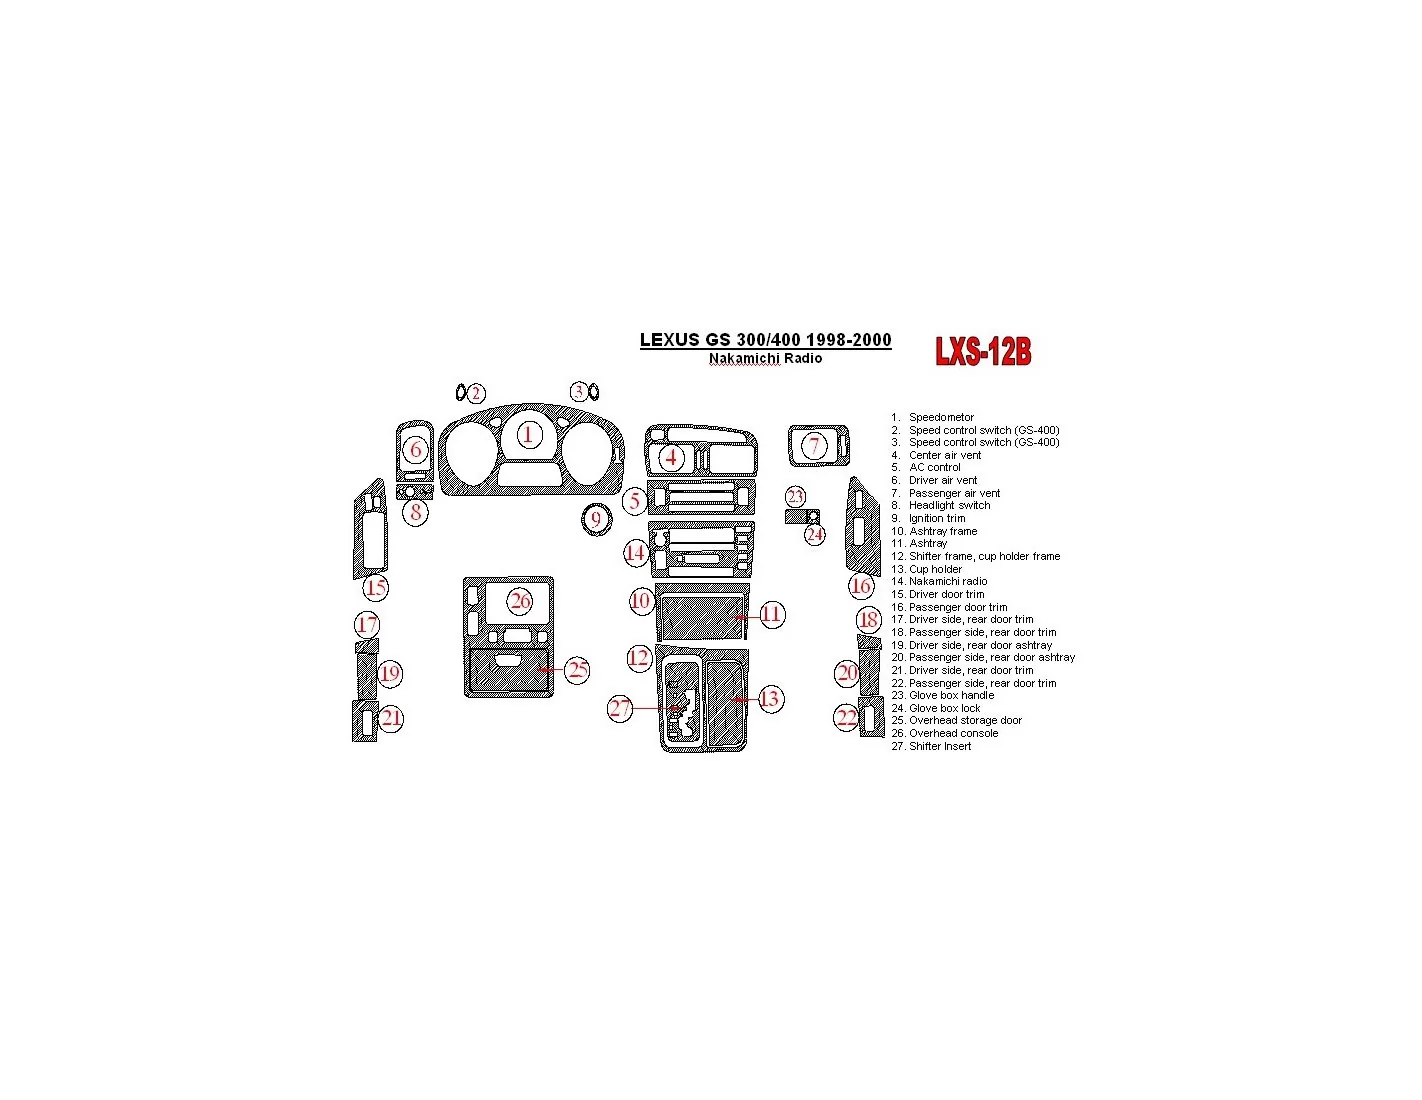 Lexus GS 1998-2000 Nakamichi Radio, OEM Compliance, 26 Parts set Decor de carlinga su interior